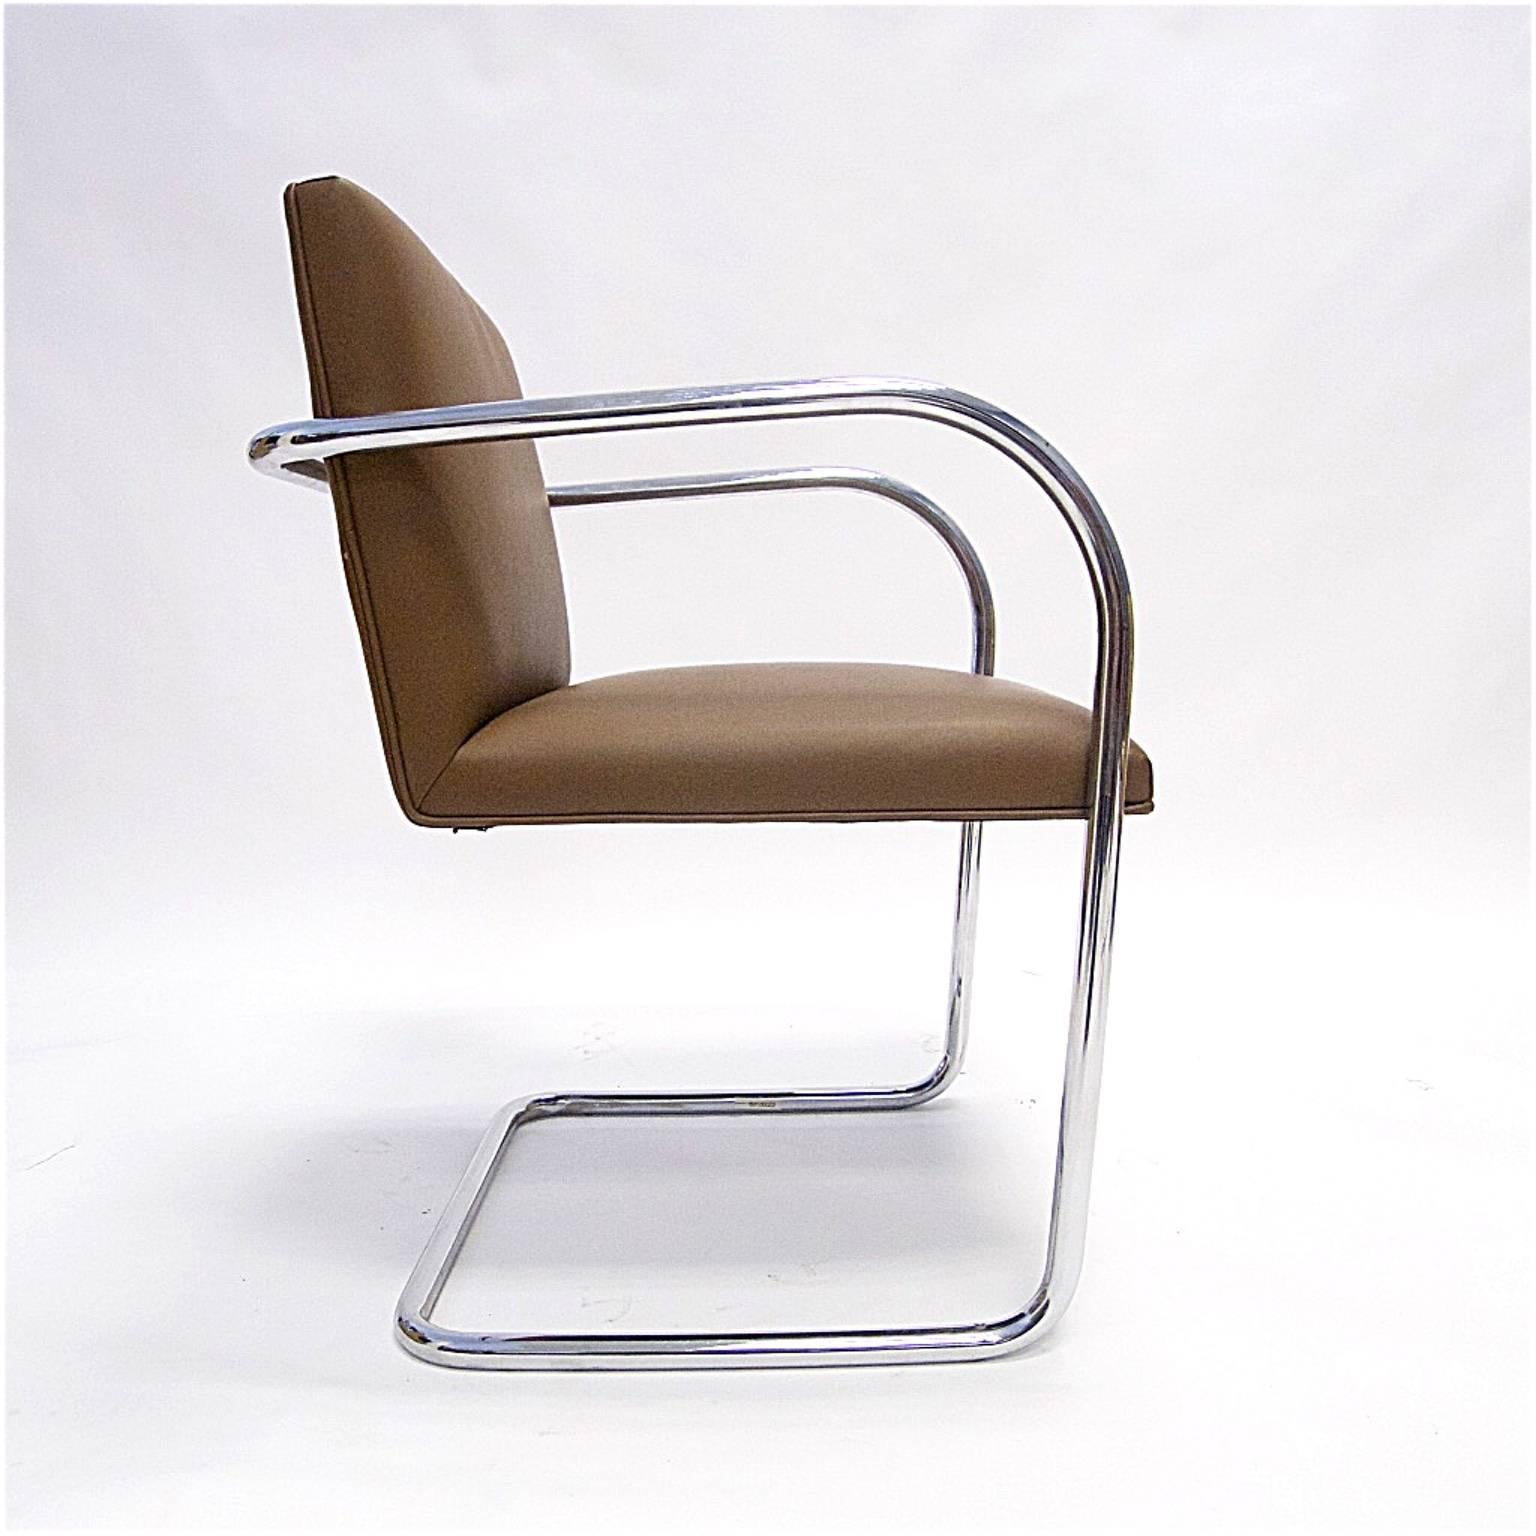 Knoll Studio leather Brno chair.